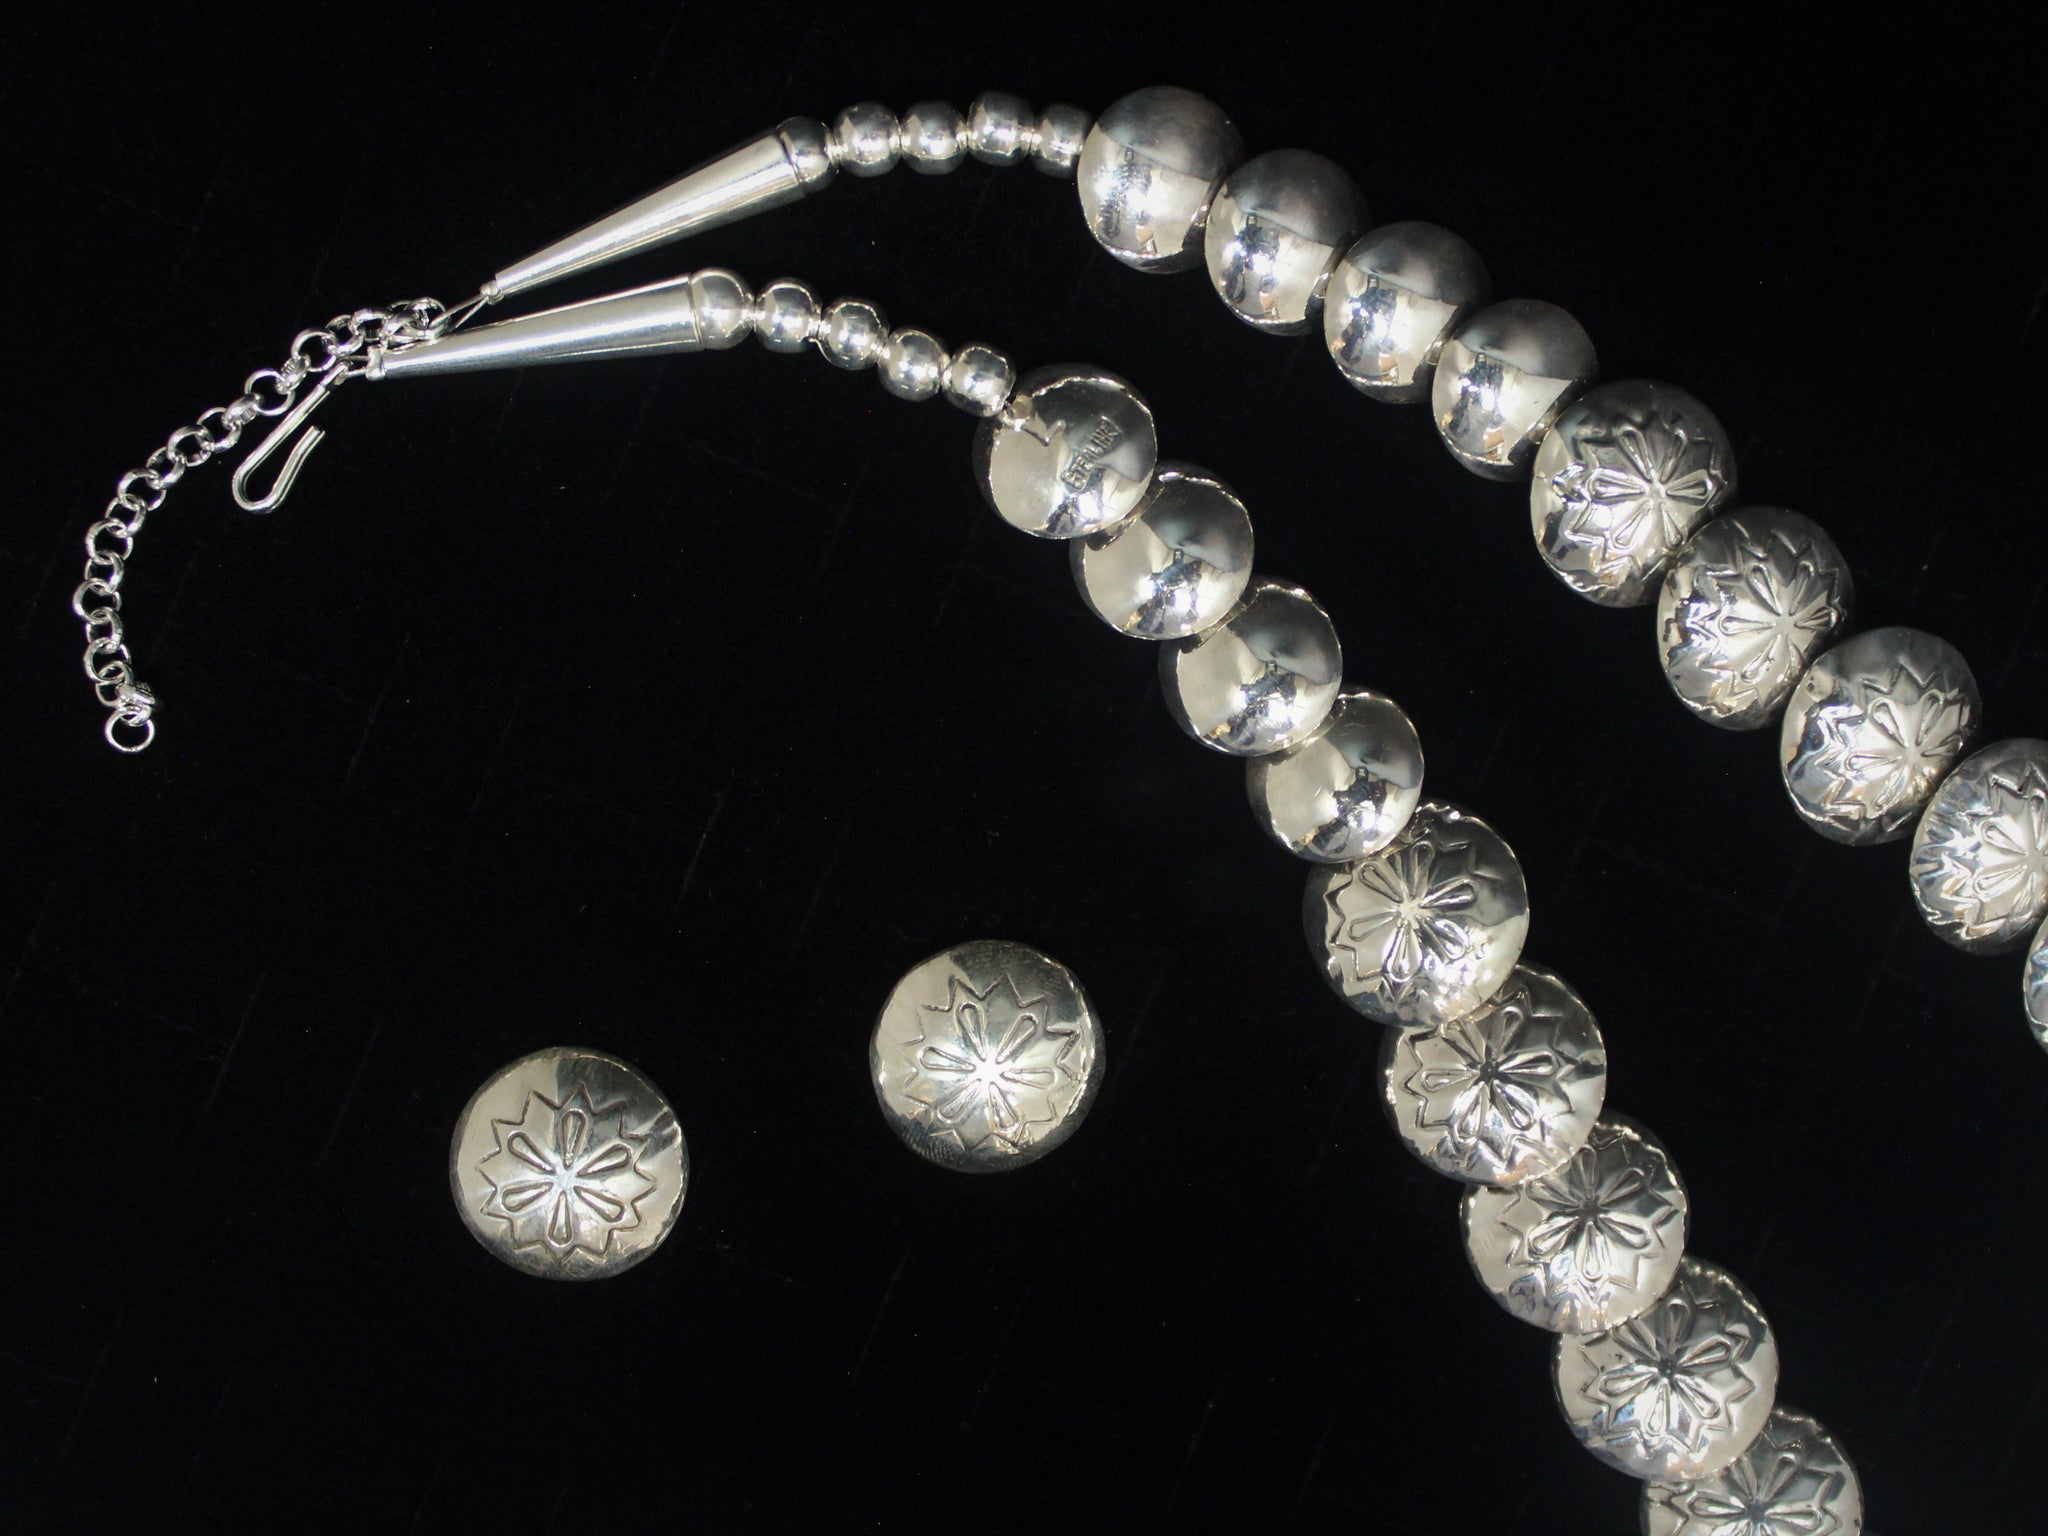 Brilliant Reversible Bead Necklace Set